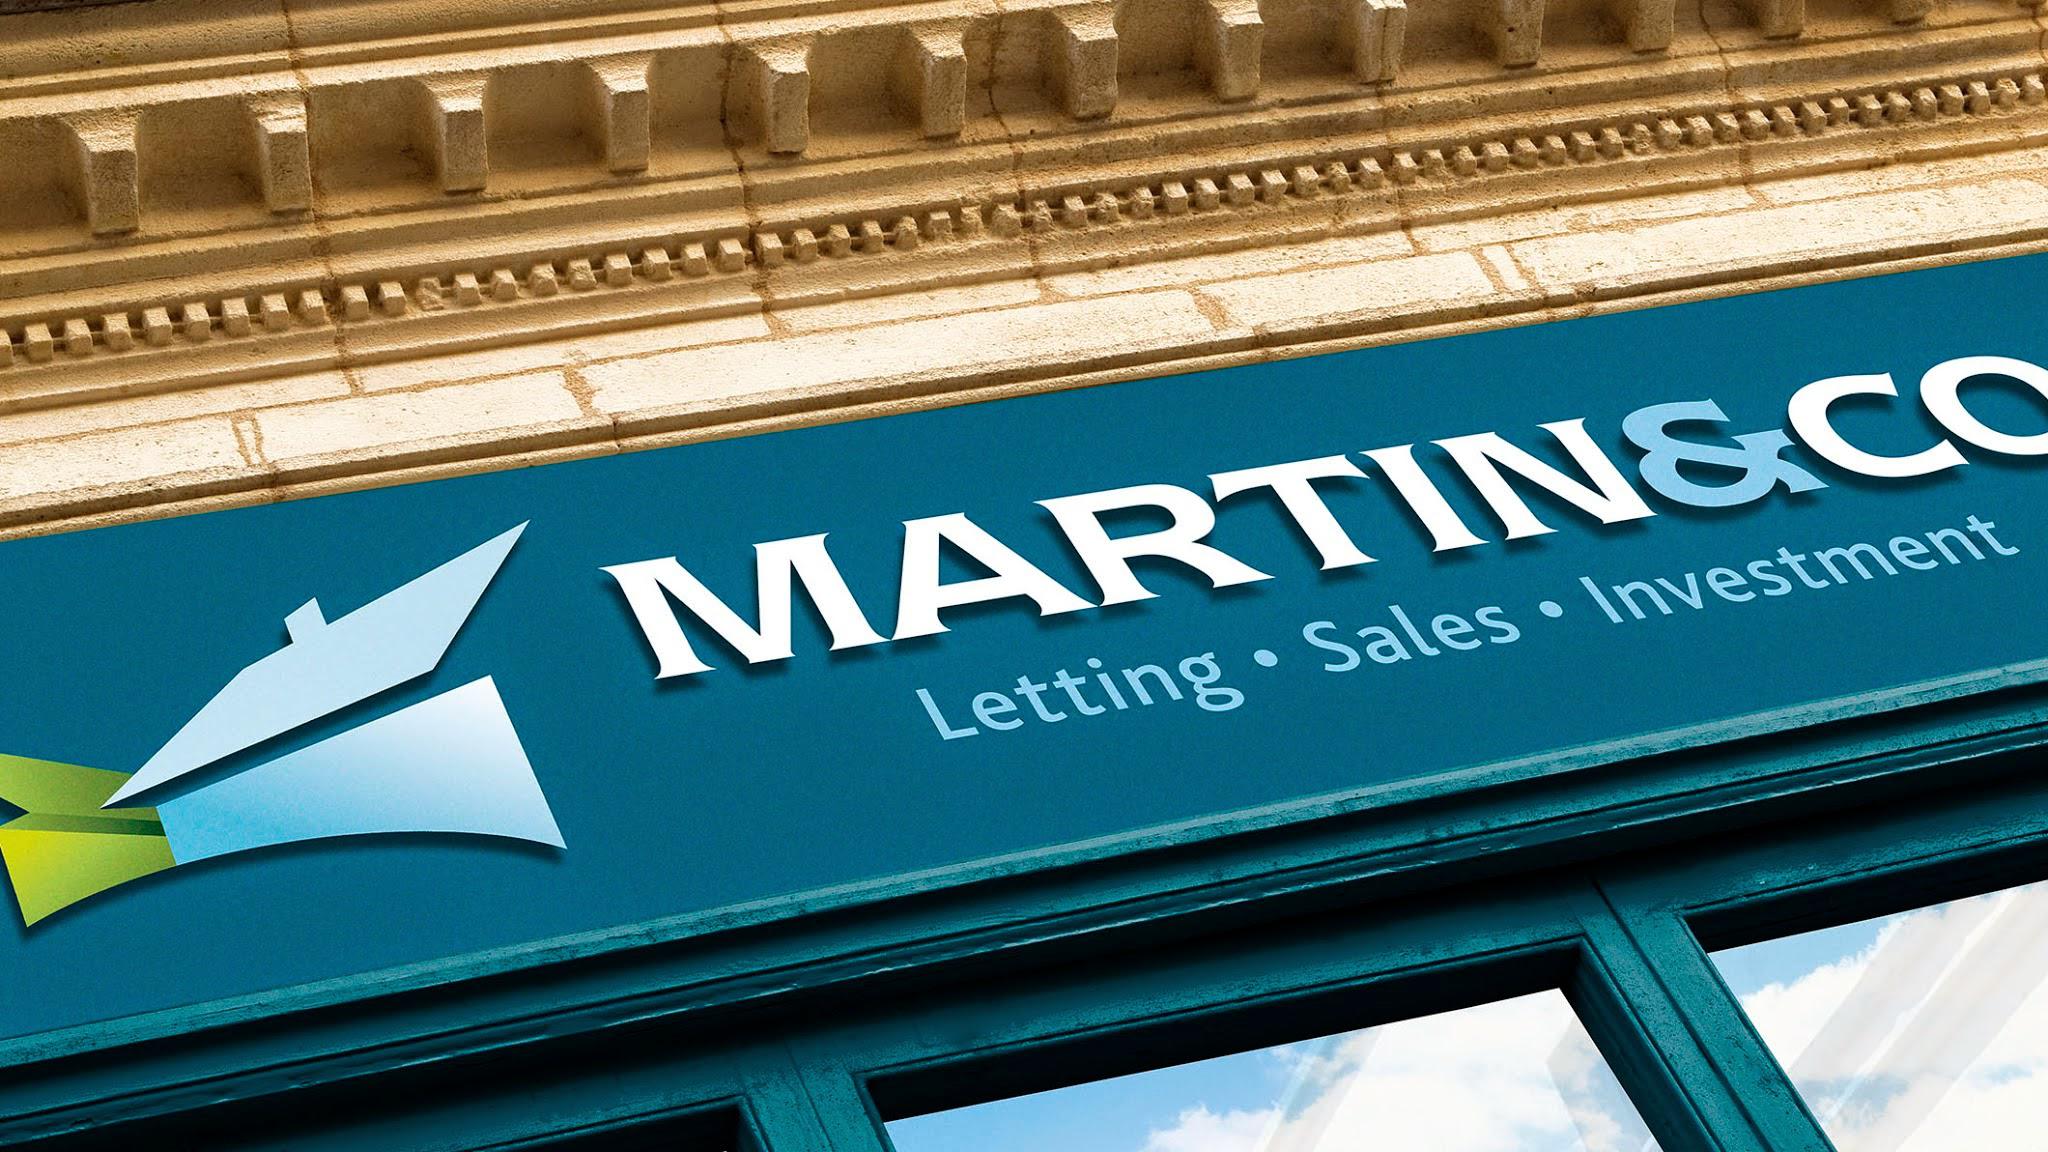 Martin & Co Slough Lettings & Estate Agents - Berkshire, Berkshire SL1 1EL - 01753 694799 | ShowMeLocal.com